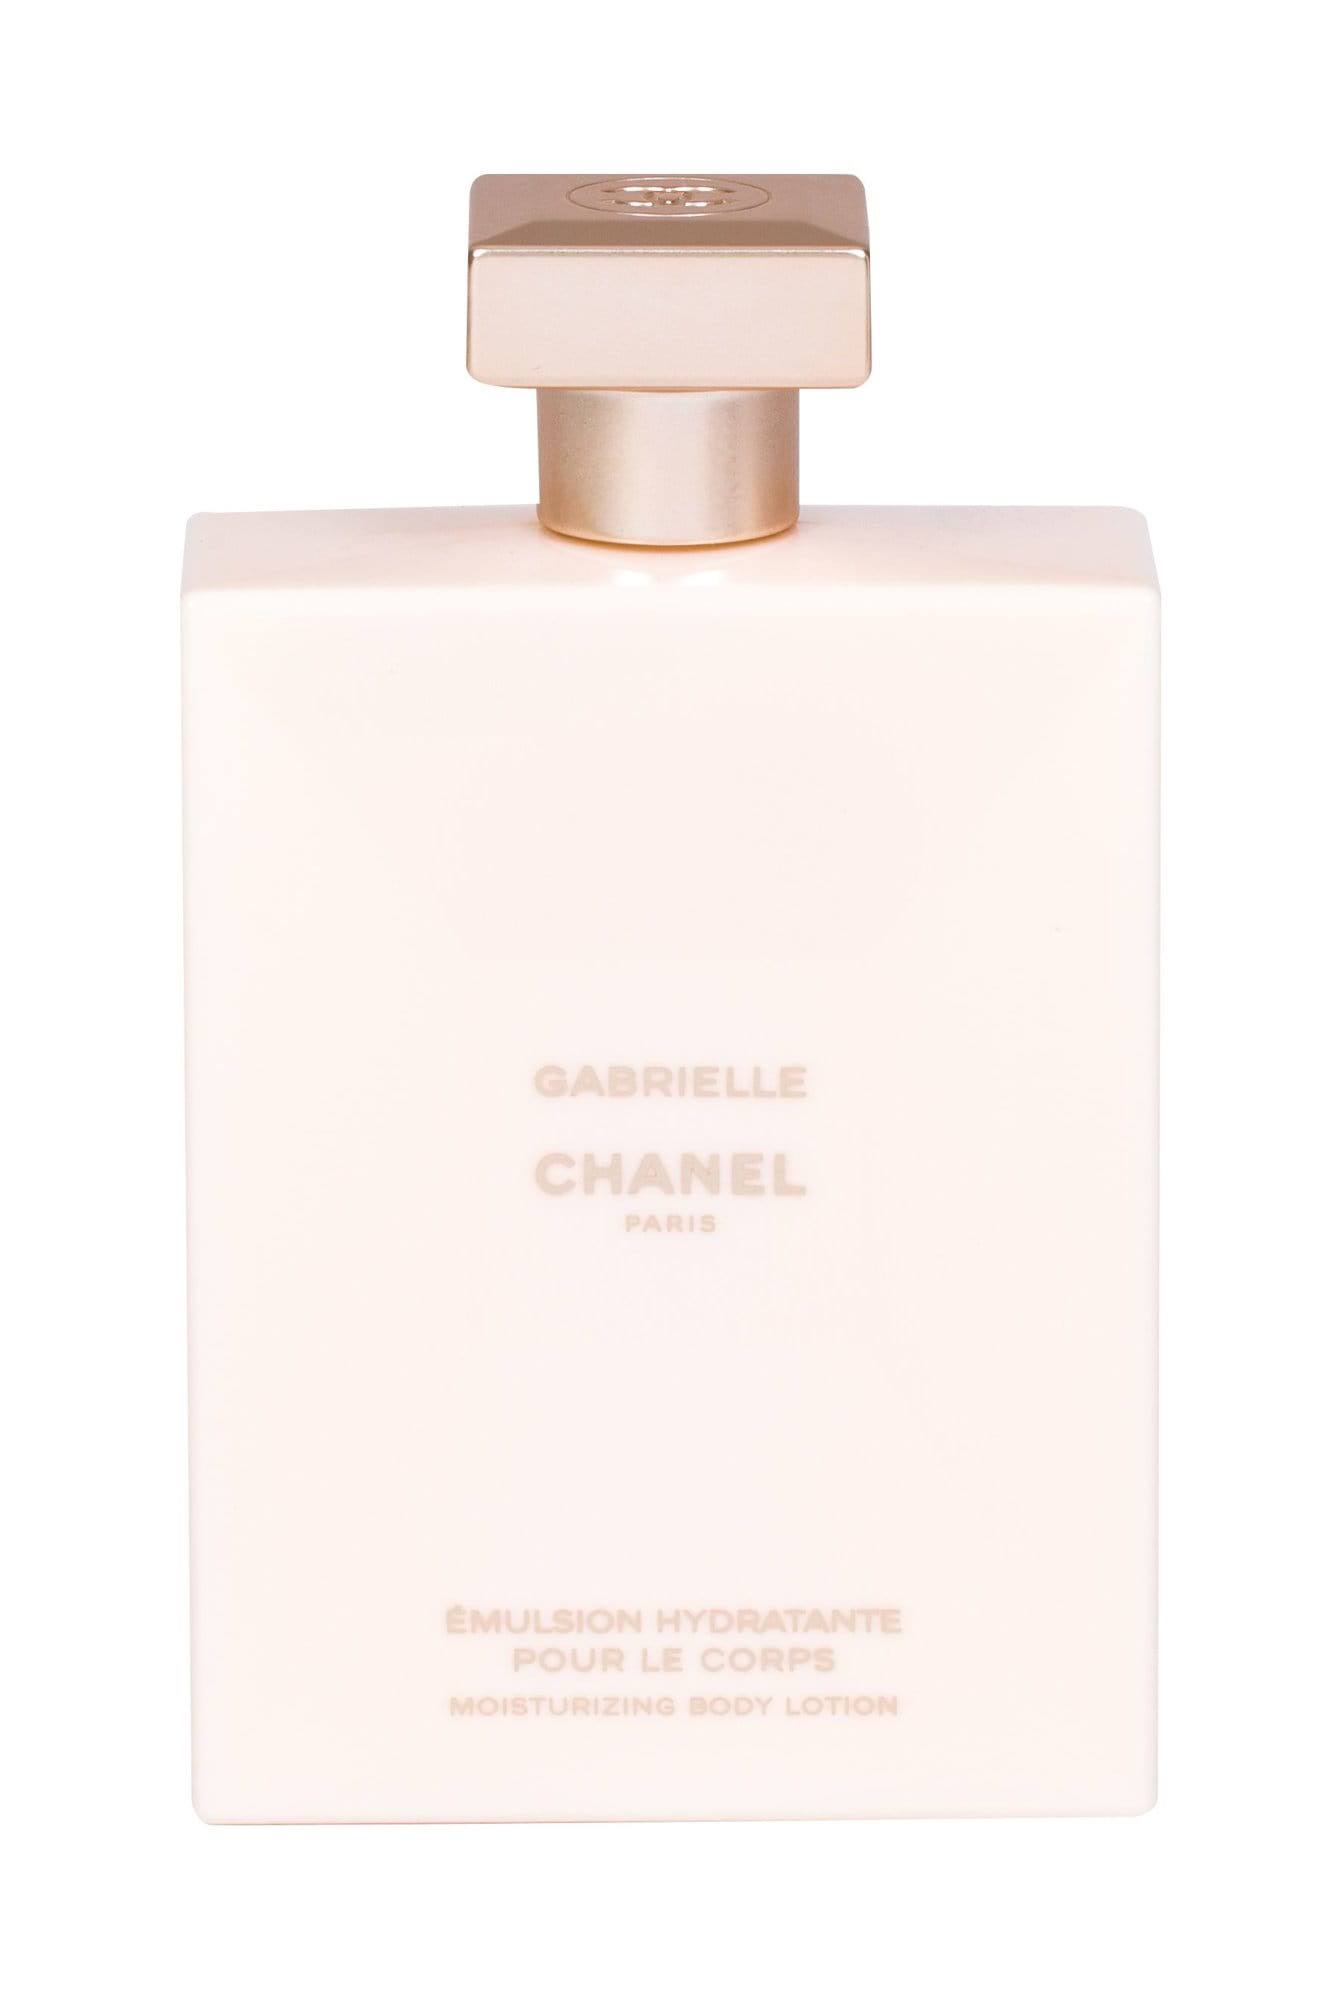 Gabrielle Chanel Body Lotion 200ml